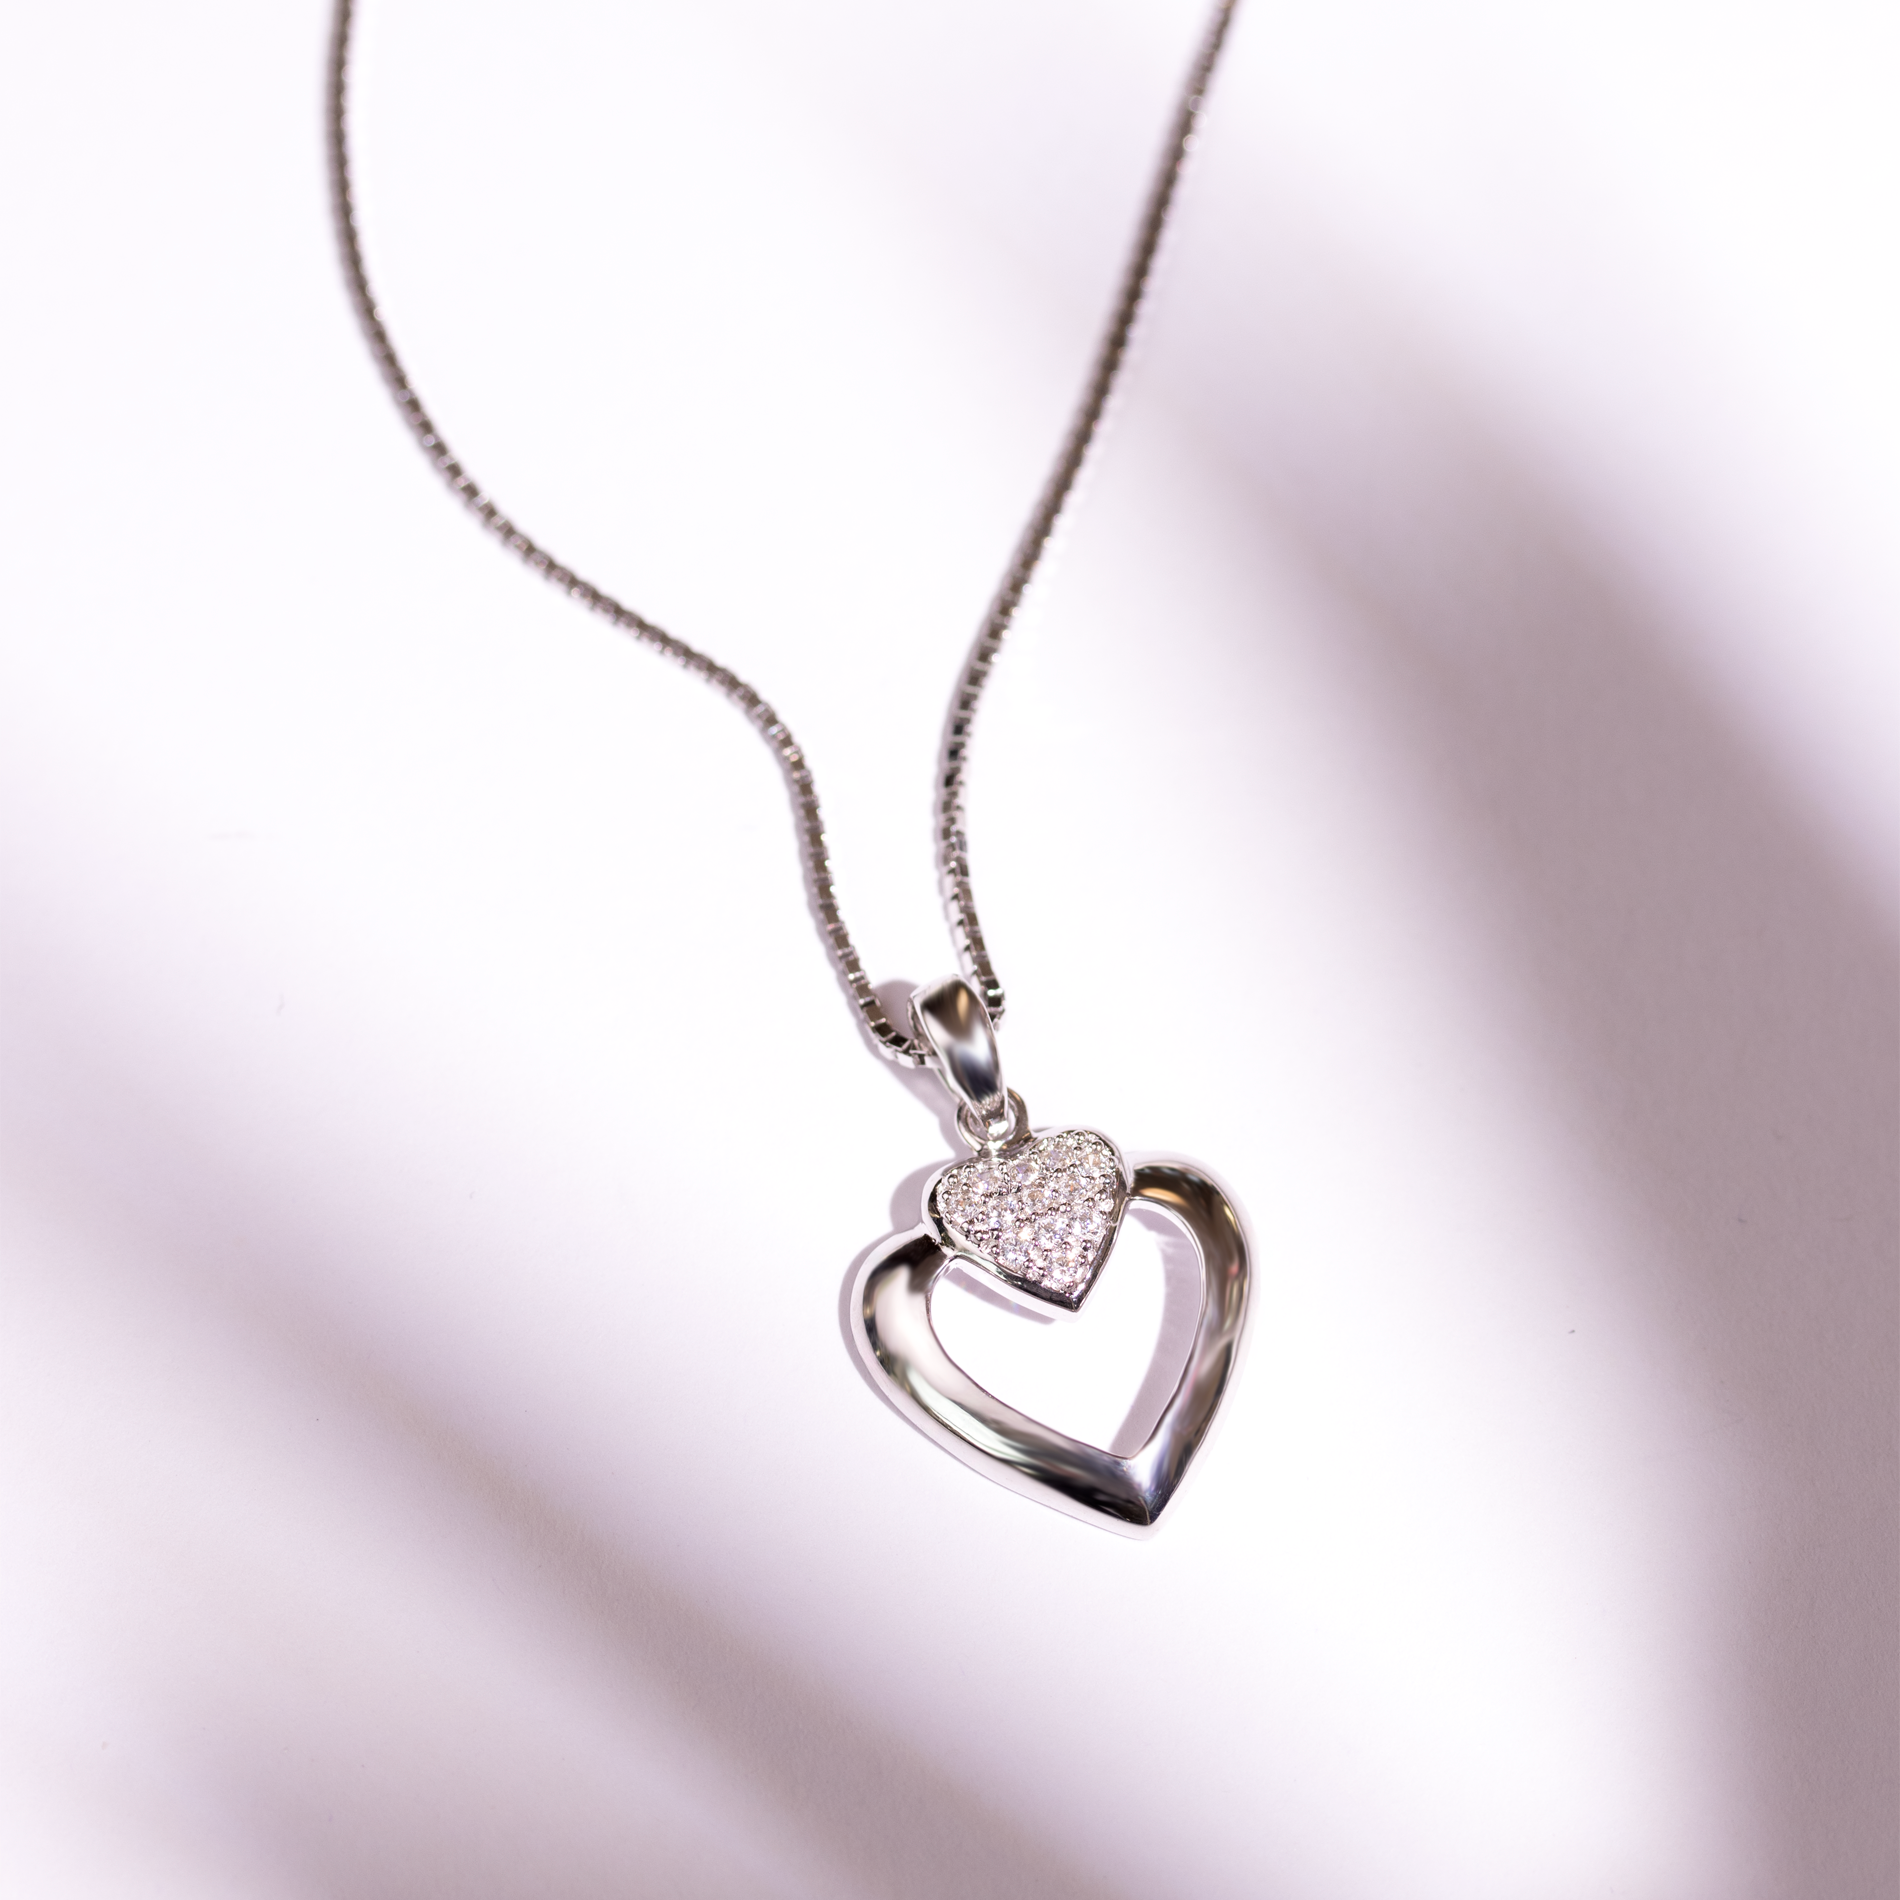 Sølv hjertehalskæde med zirkonia